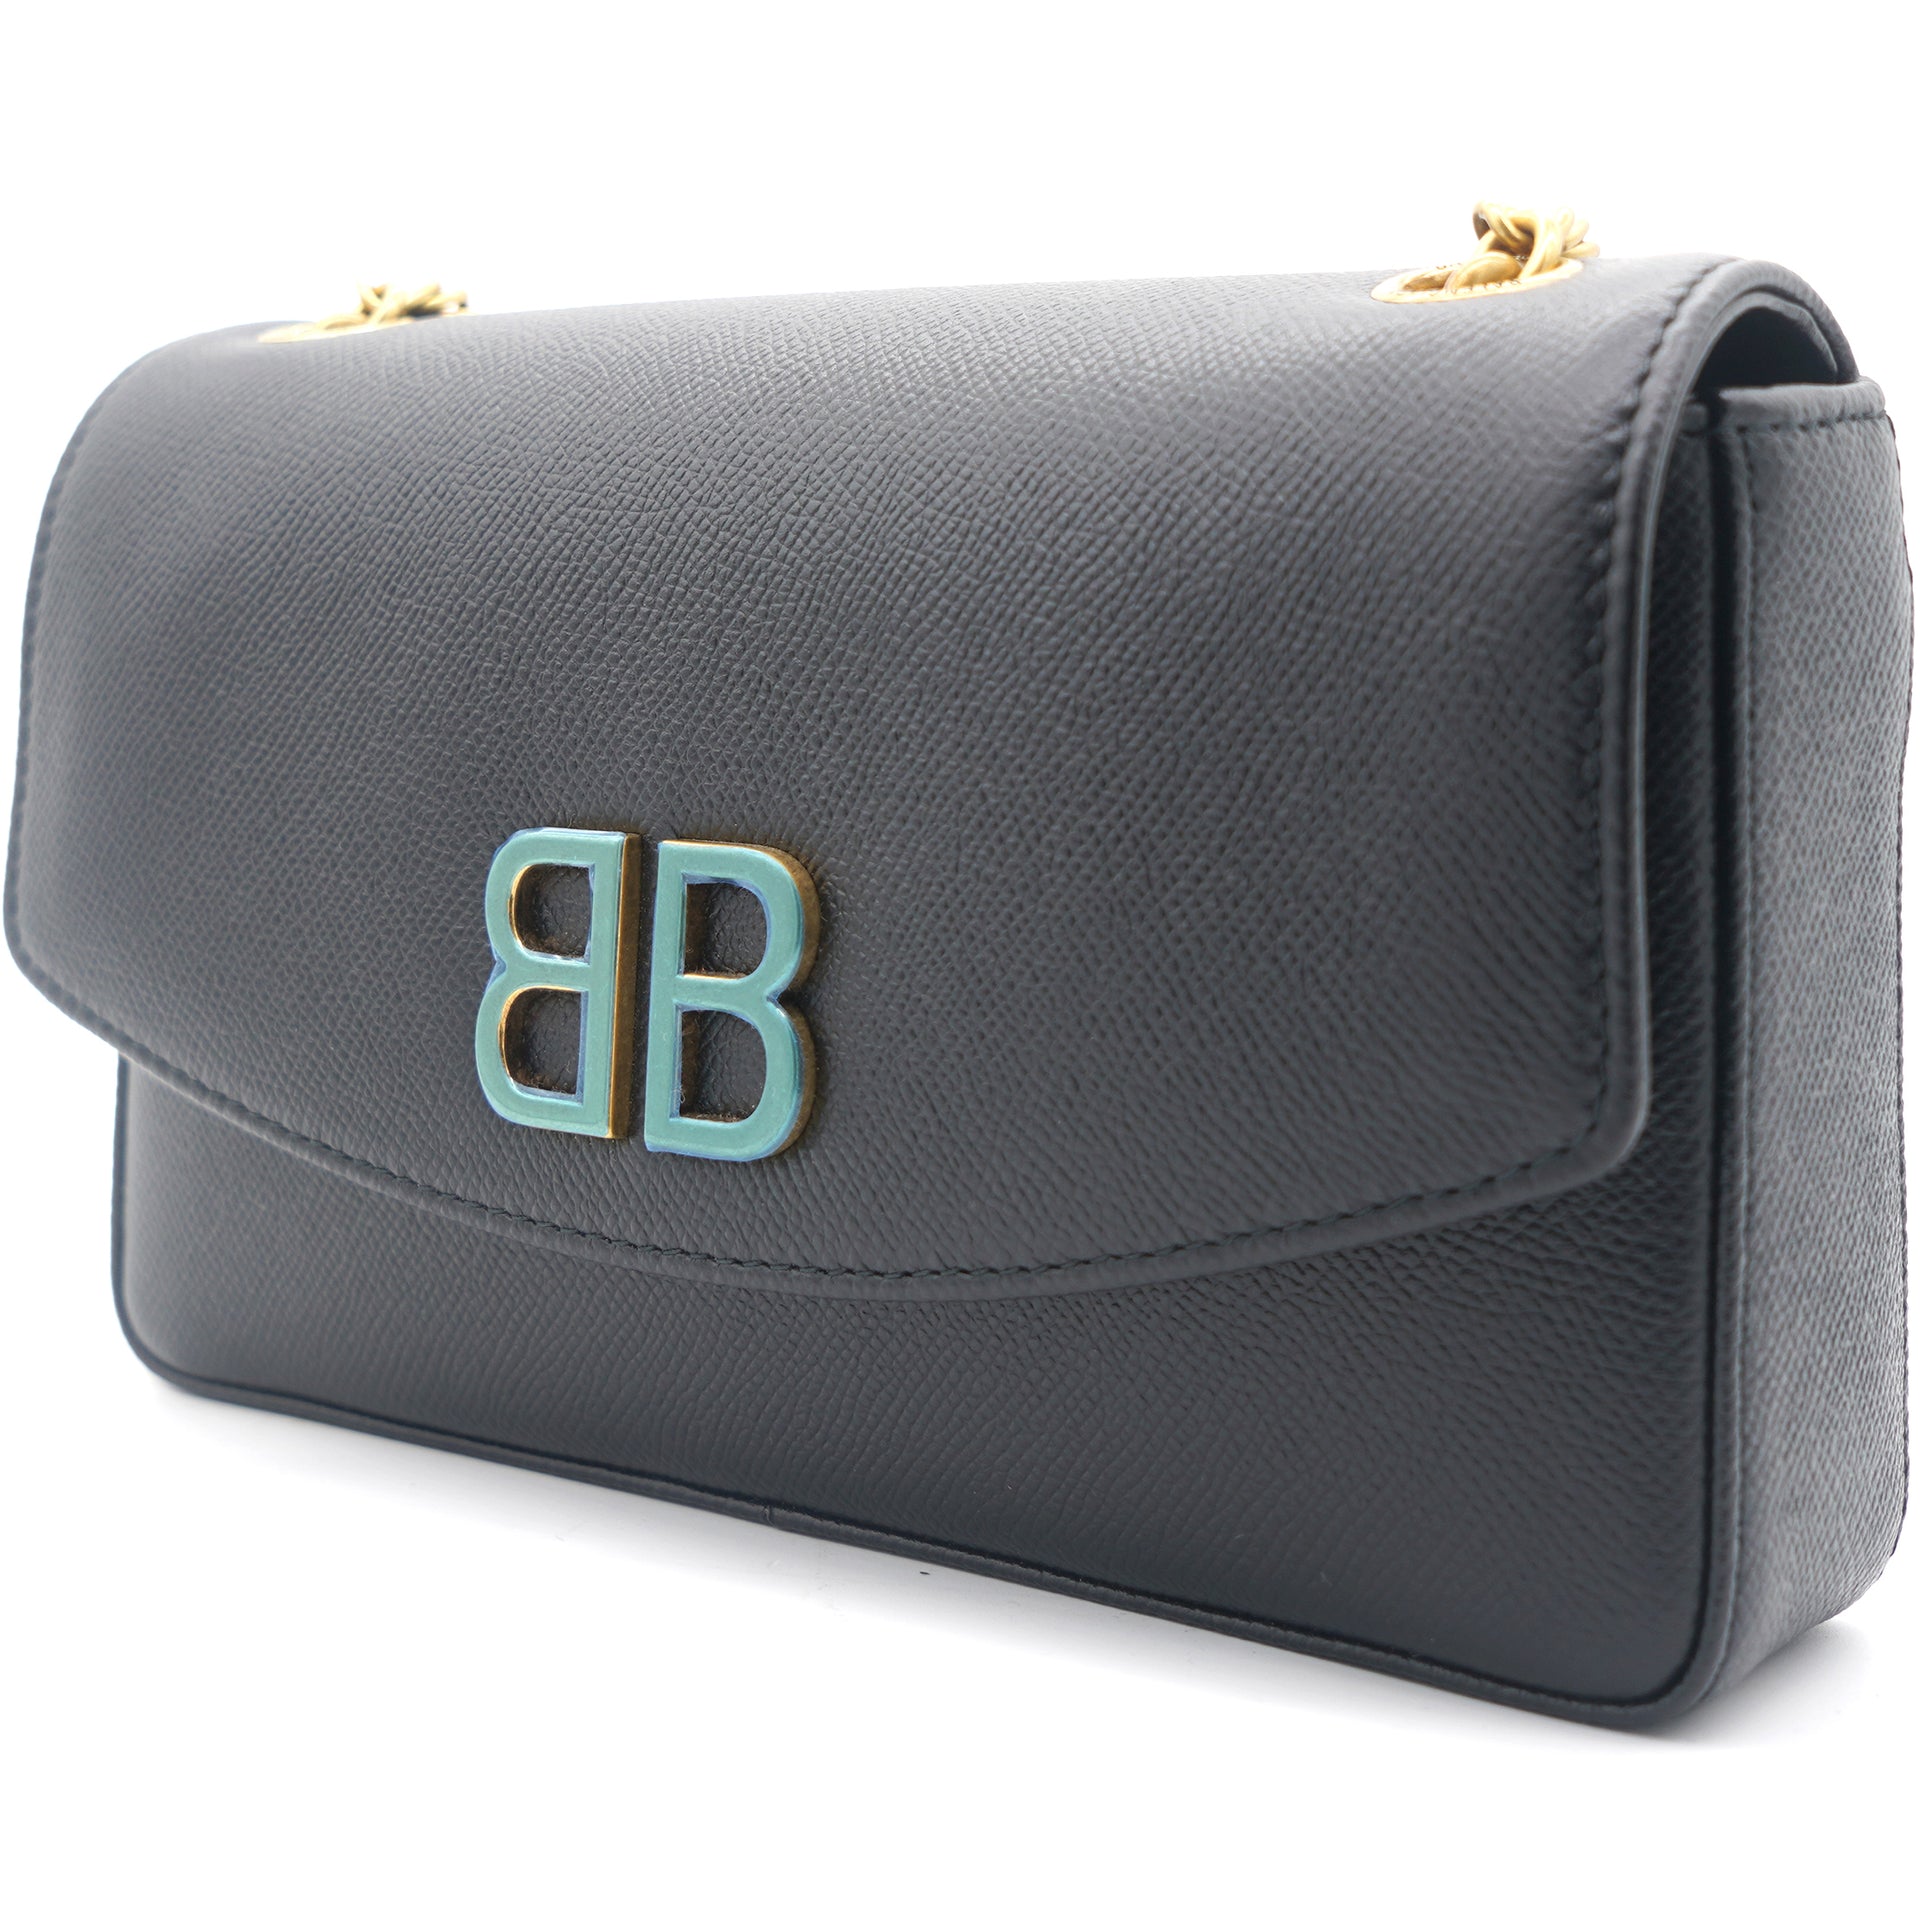 BB Chain Handbag Leather Small